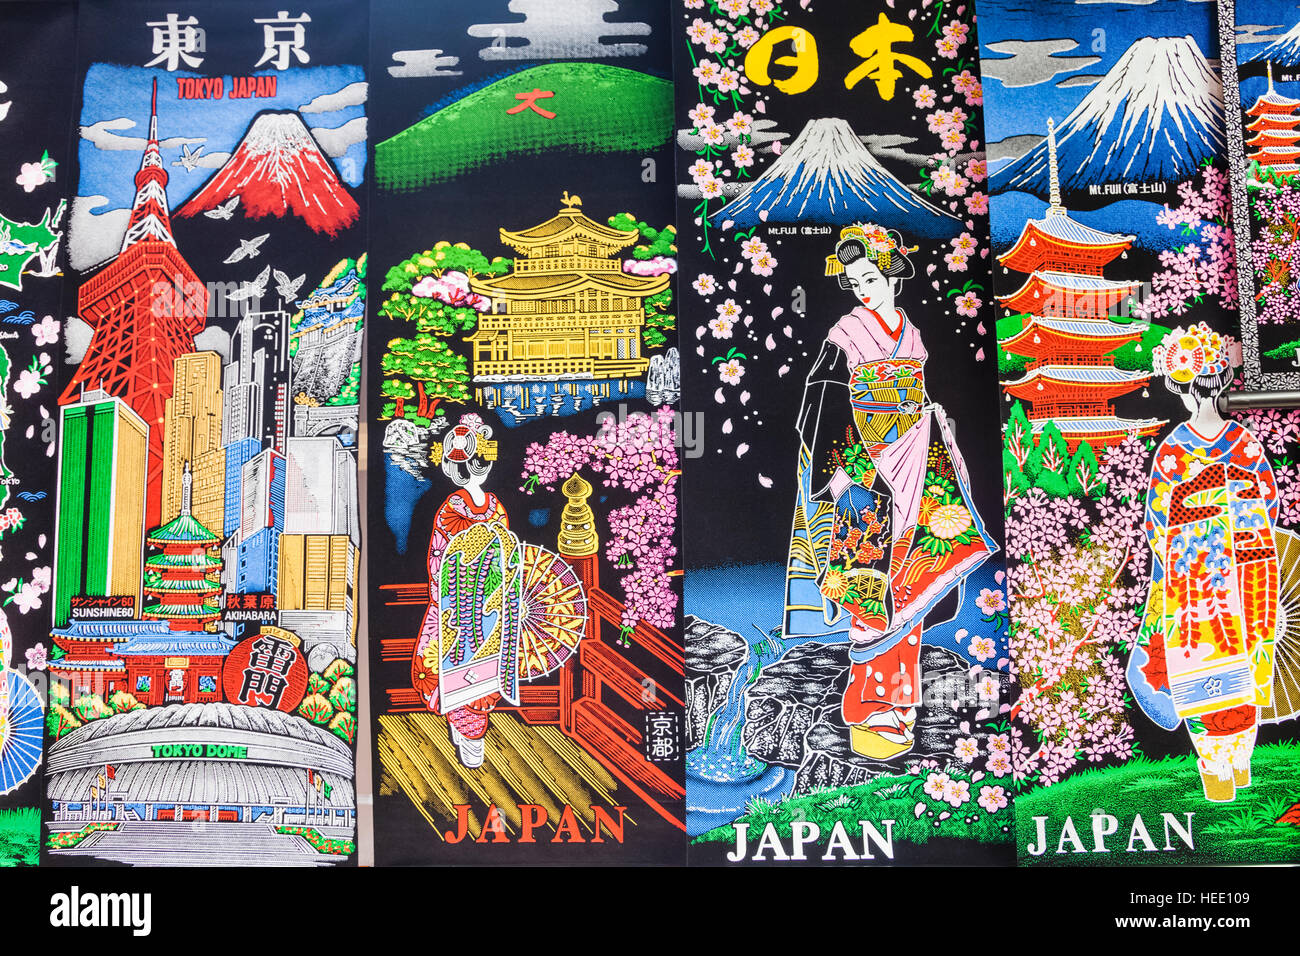 Japan, Honshu, Tokio, Asakusa, Nakamise Shopping Street, Souvenir Shop Display der japanischen Schriftrollen Darstellung der japanischen Szene Stockfoto